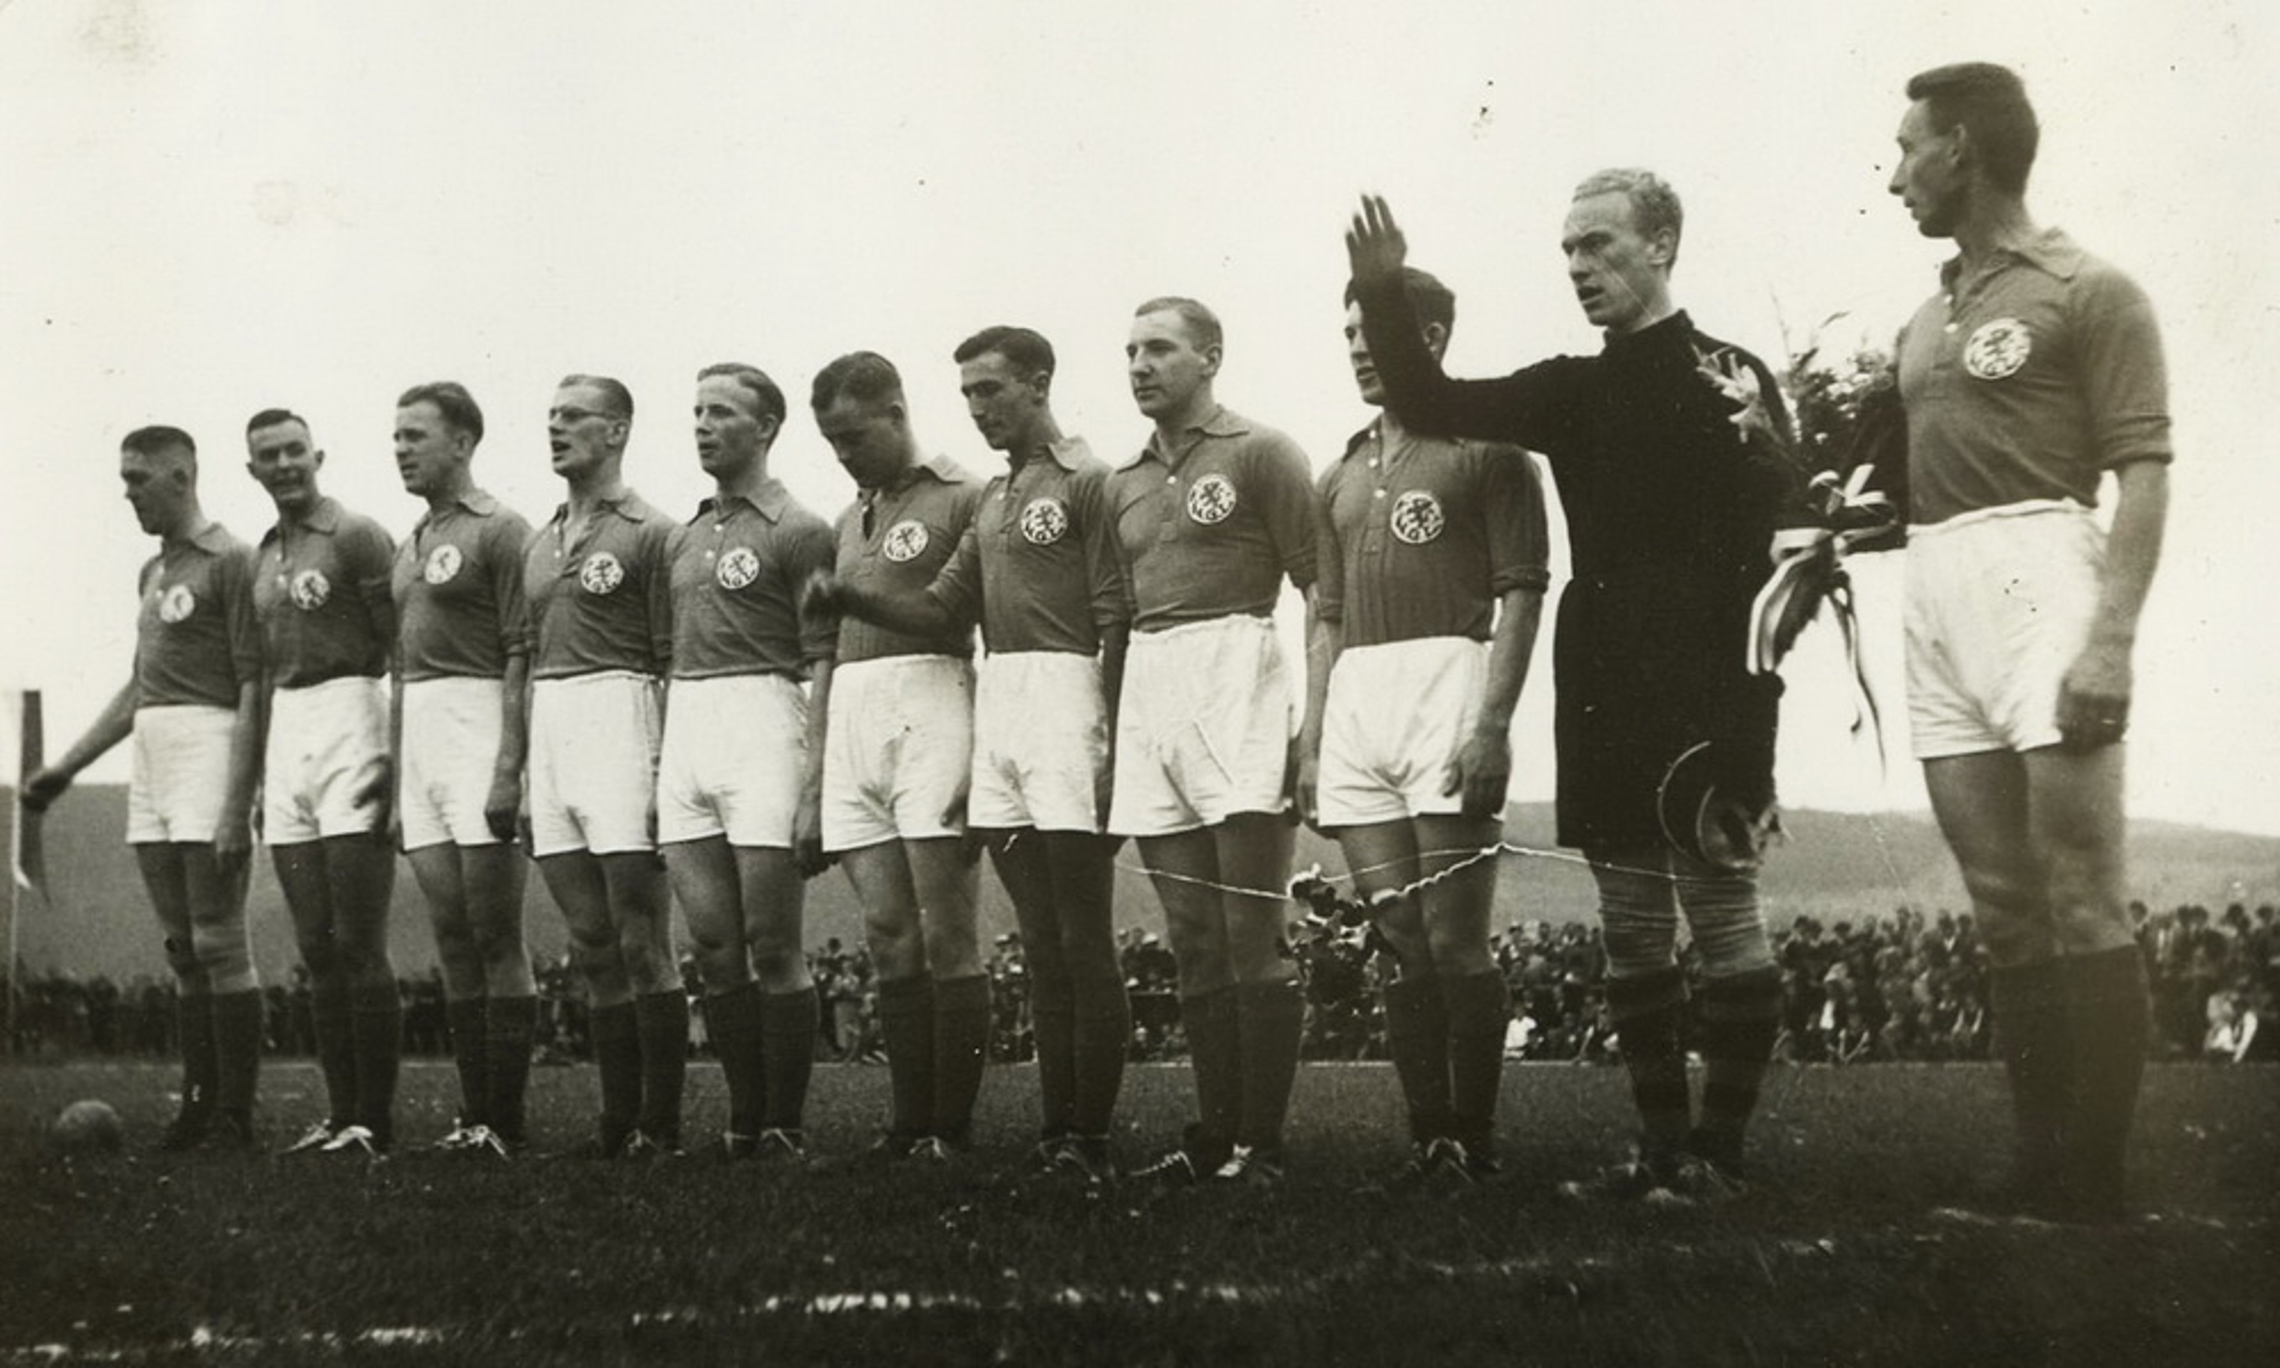 1937-08-22 Schweiz - Holland 19:3 (9:1), Winterthur, Zuschauer 4000